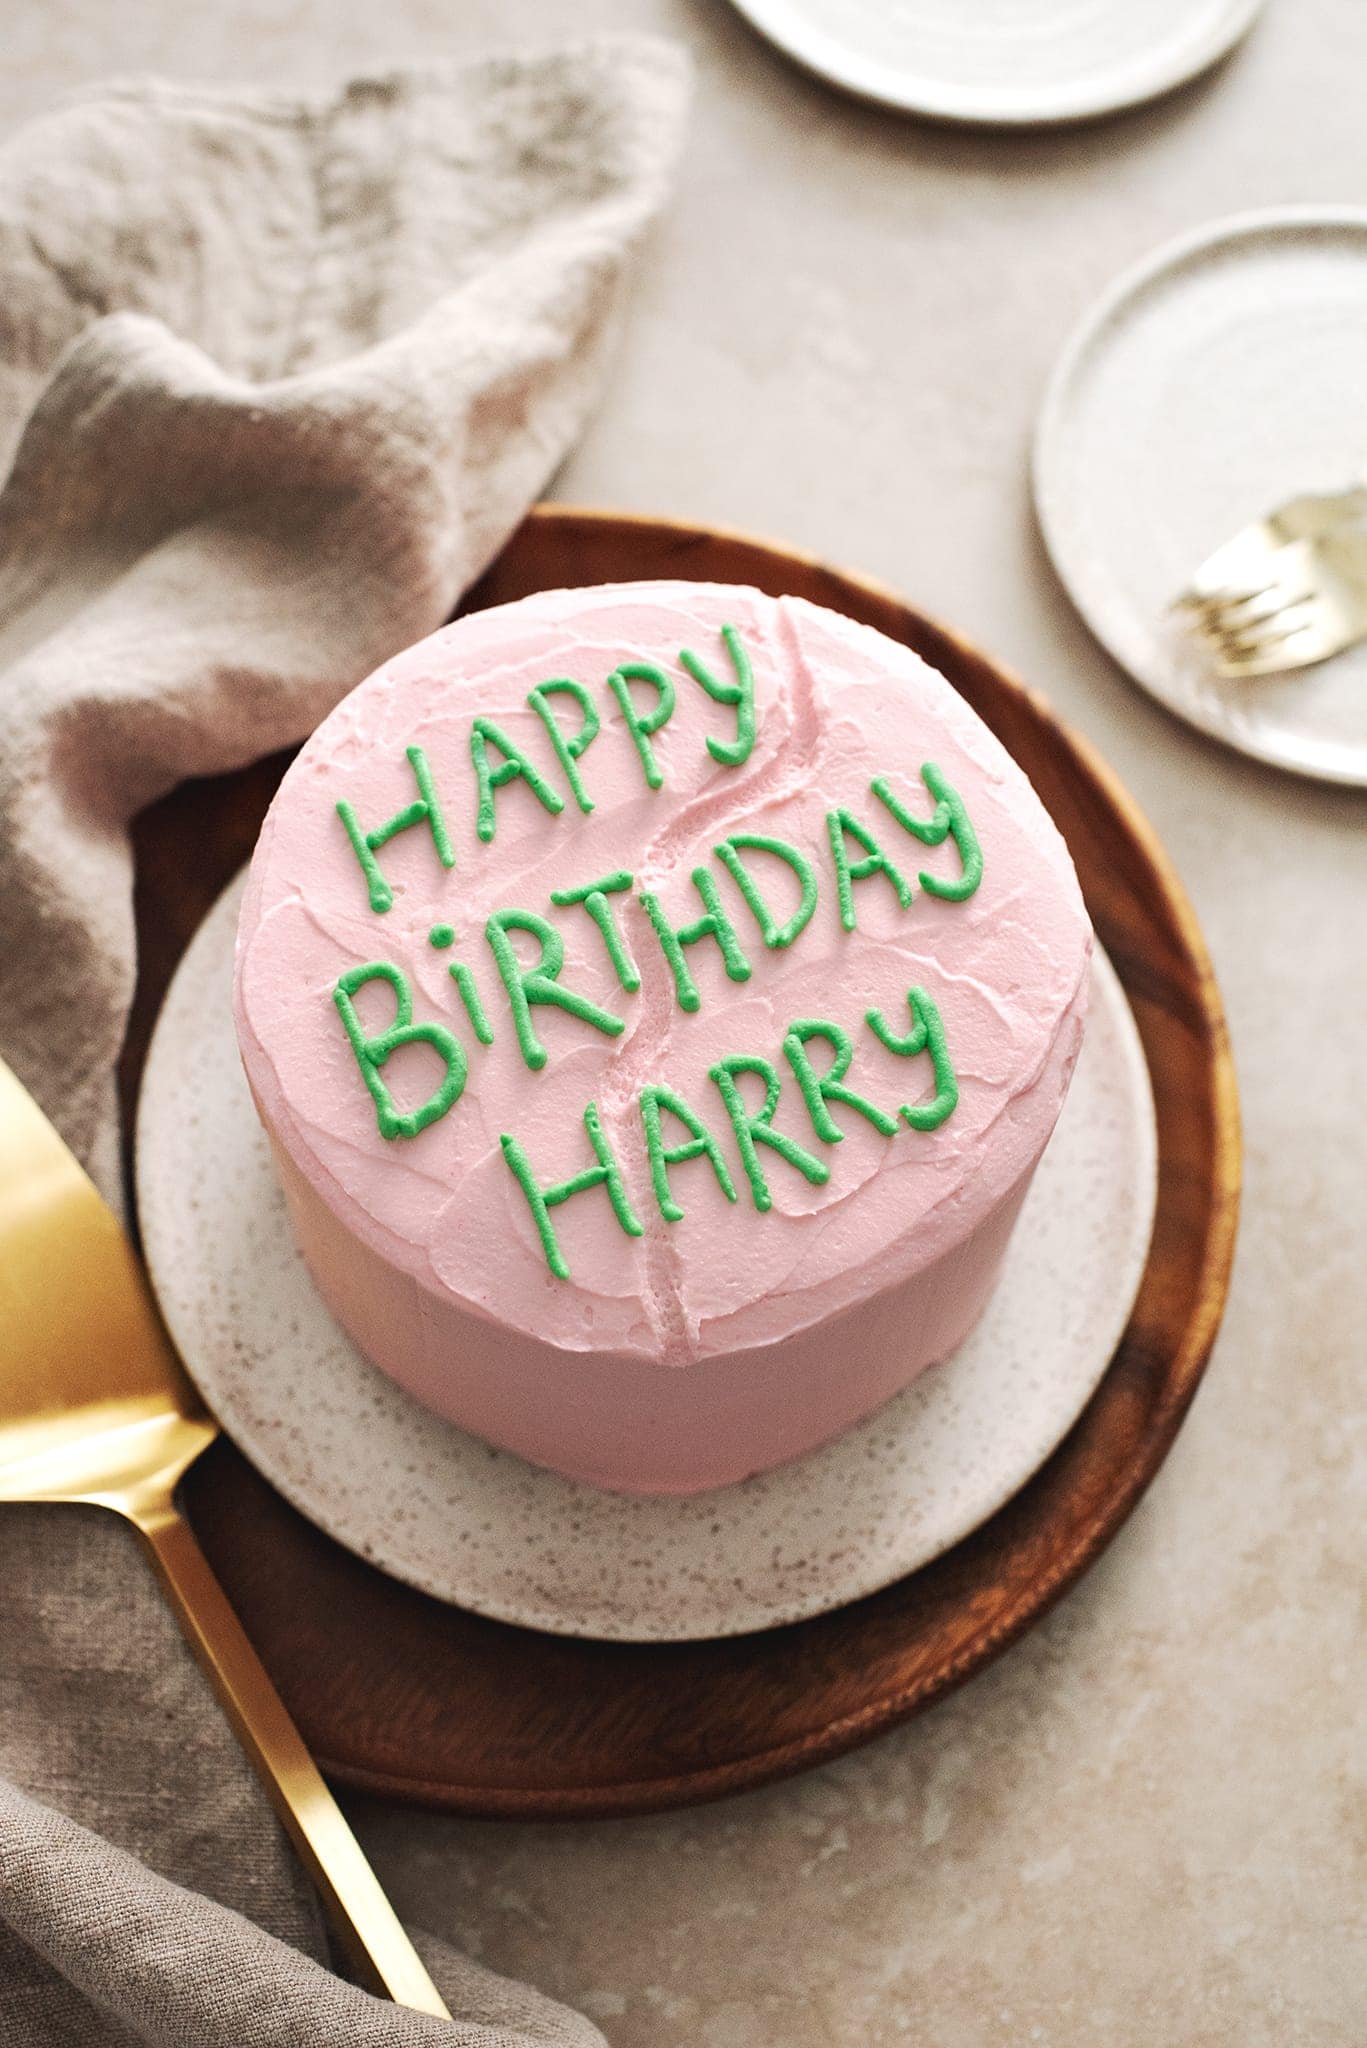 Harry Potter Cake 3 - Montilio's Bakery